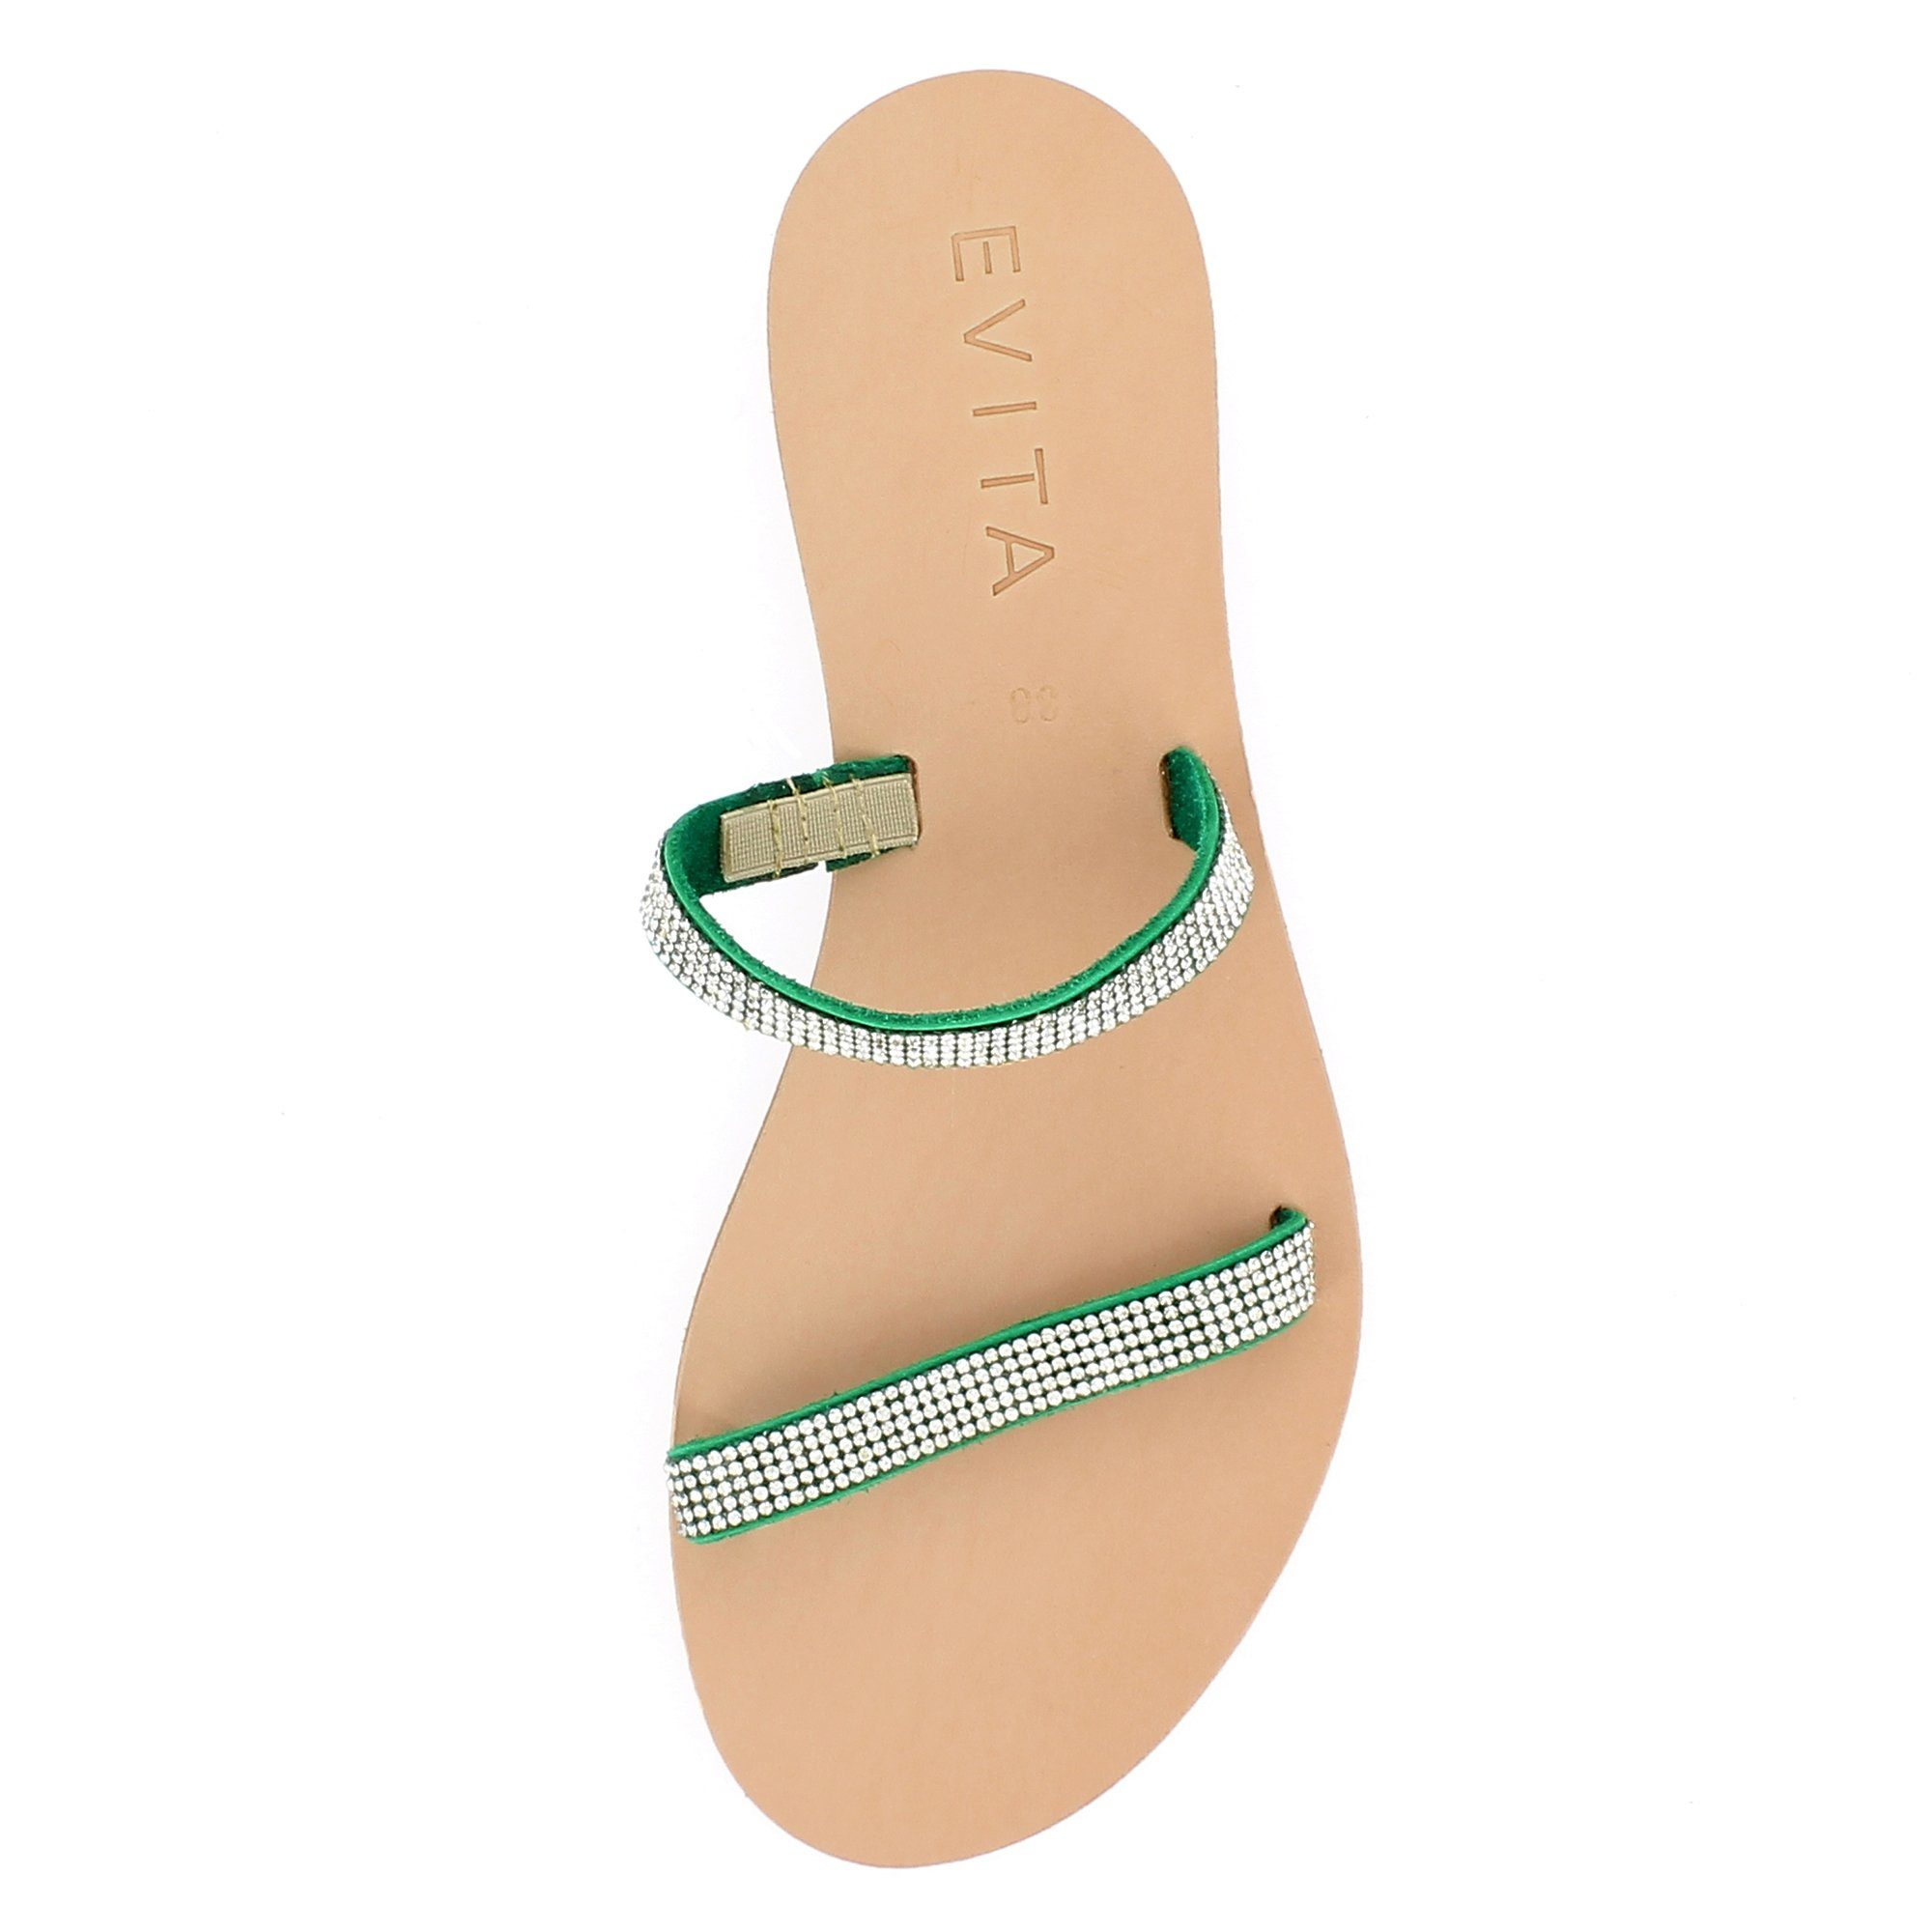 Sandale Evita GRETA grün